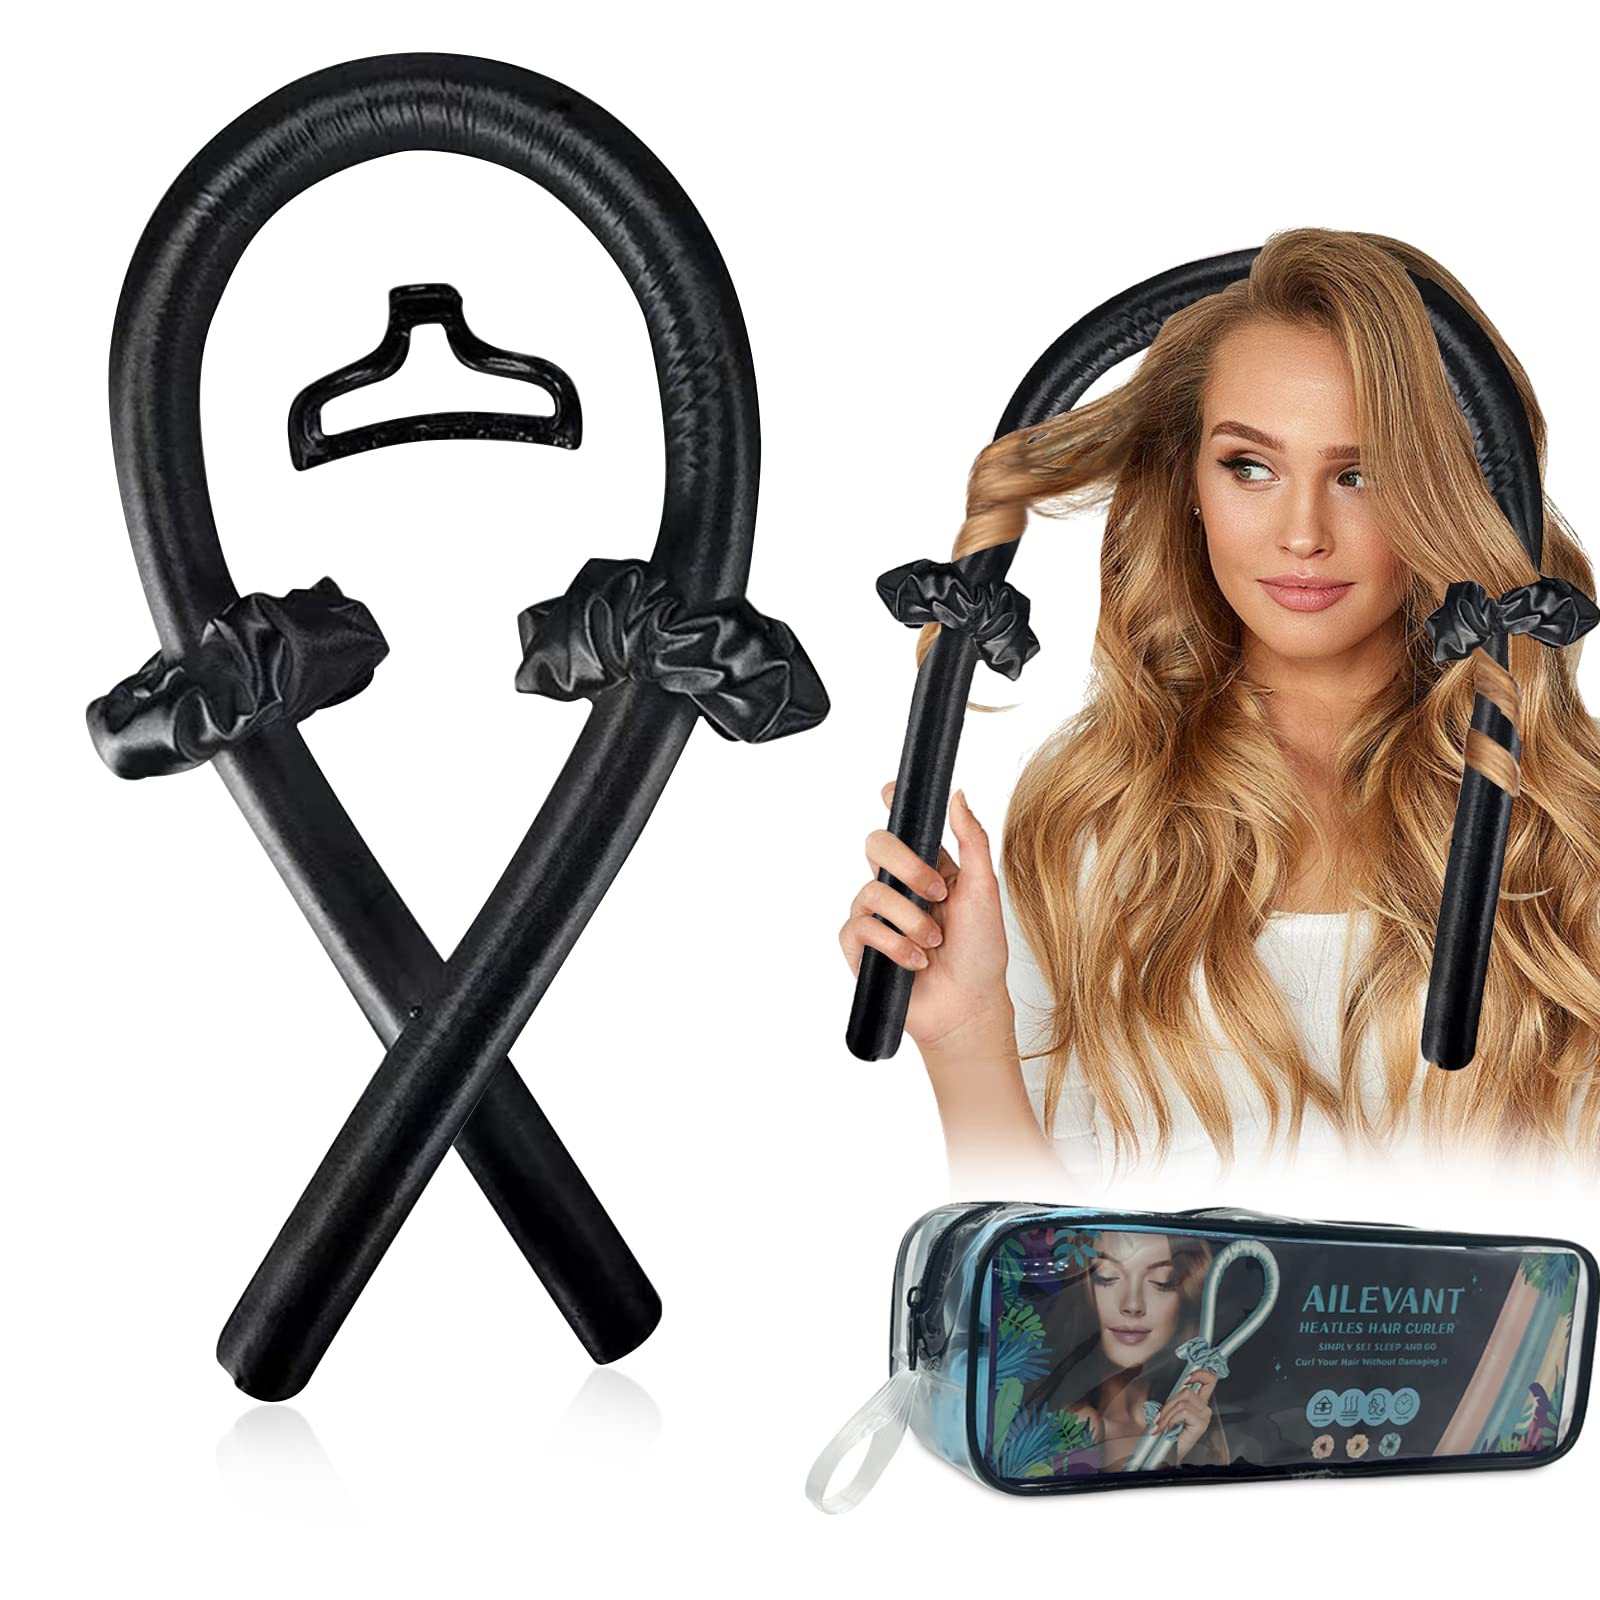 Heatless Hair Curler Heatless Curling Rod Headband Heatless Curls Soft  Rubber Hair Rollers Curling Ribbon ,Hair